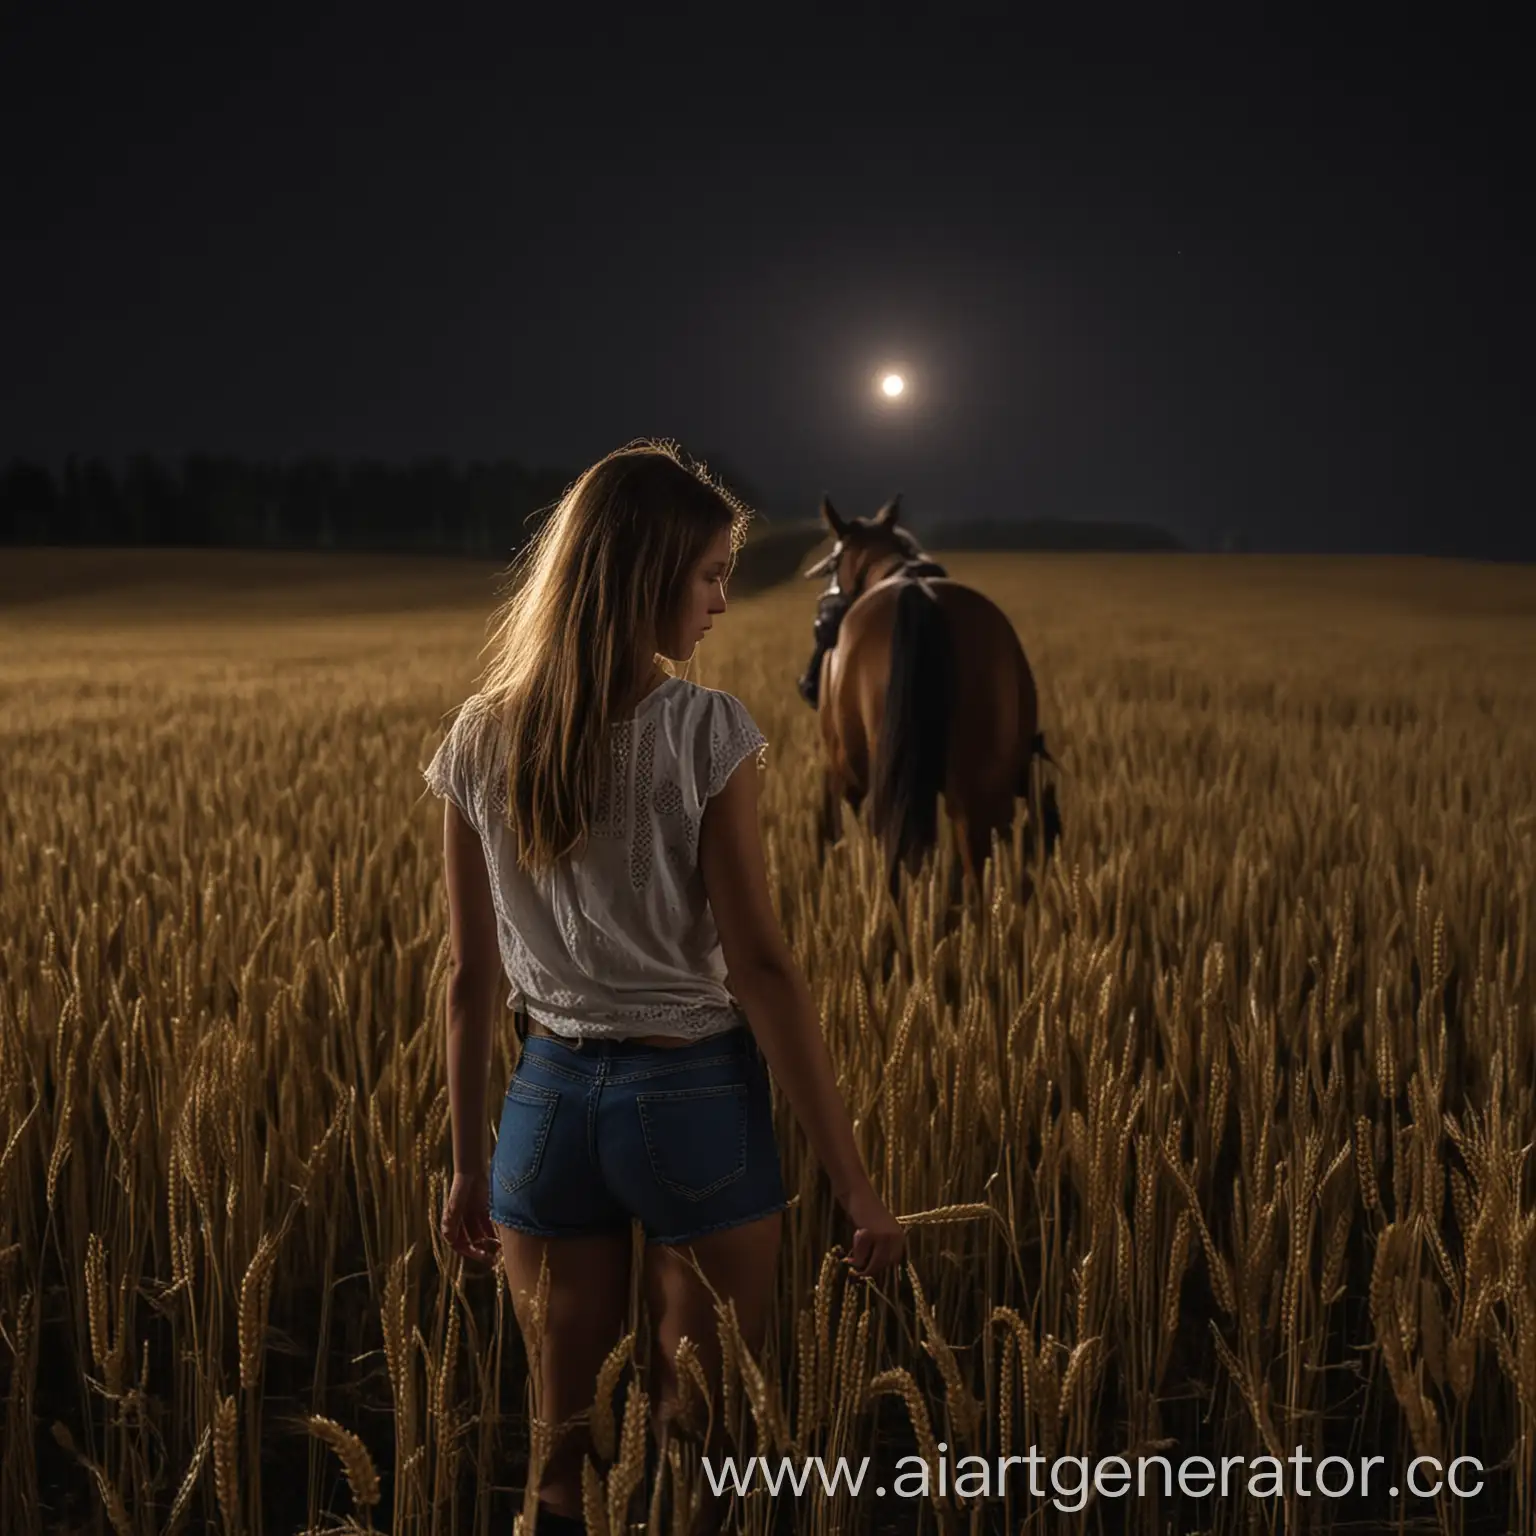 Ukrainian-Night-Girl-and-Horse-in-Wheat-Field